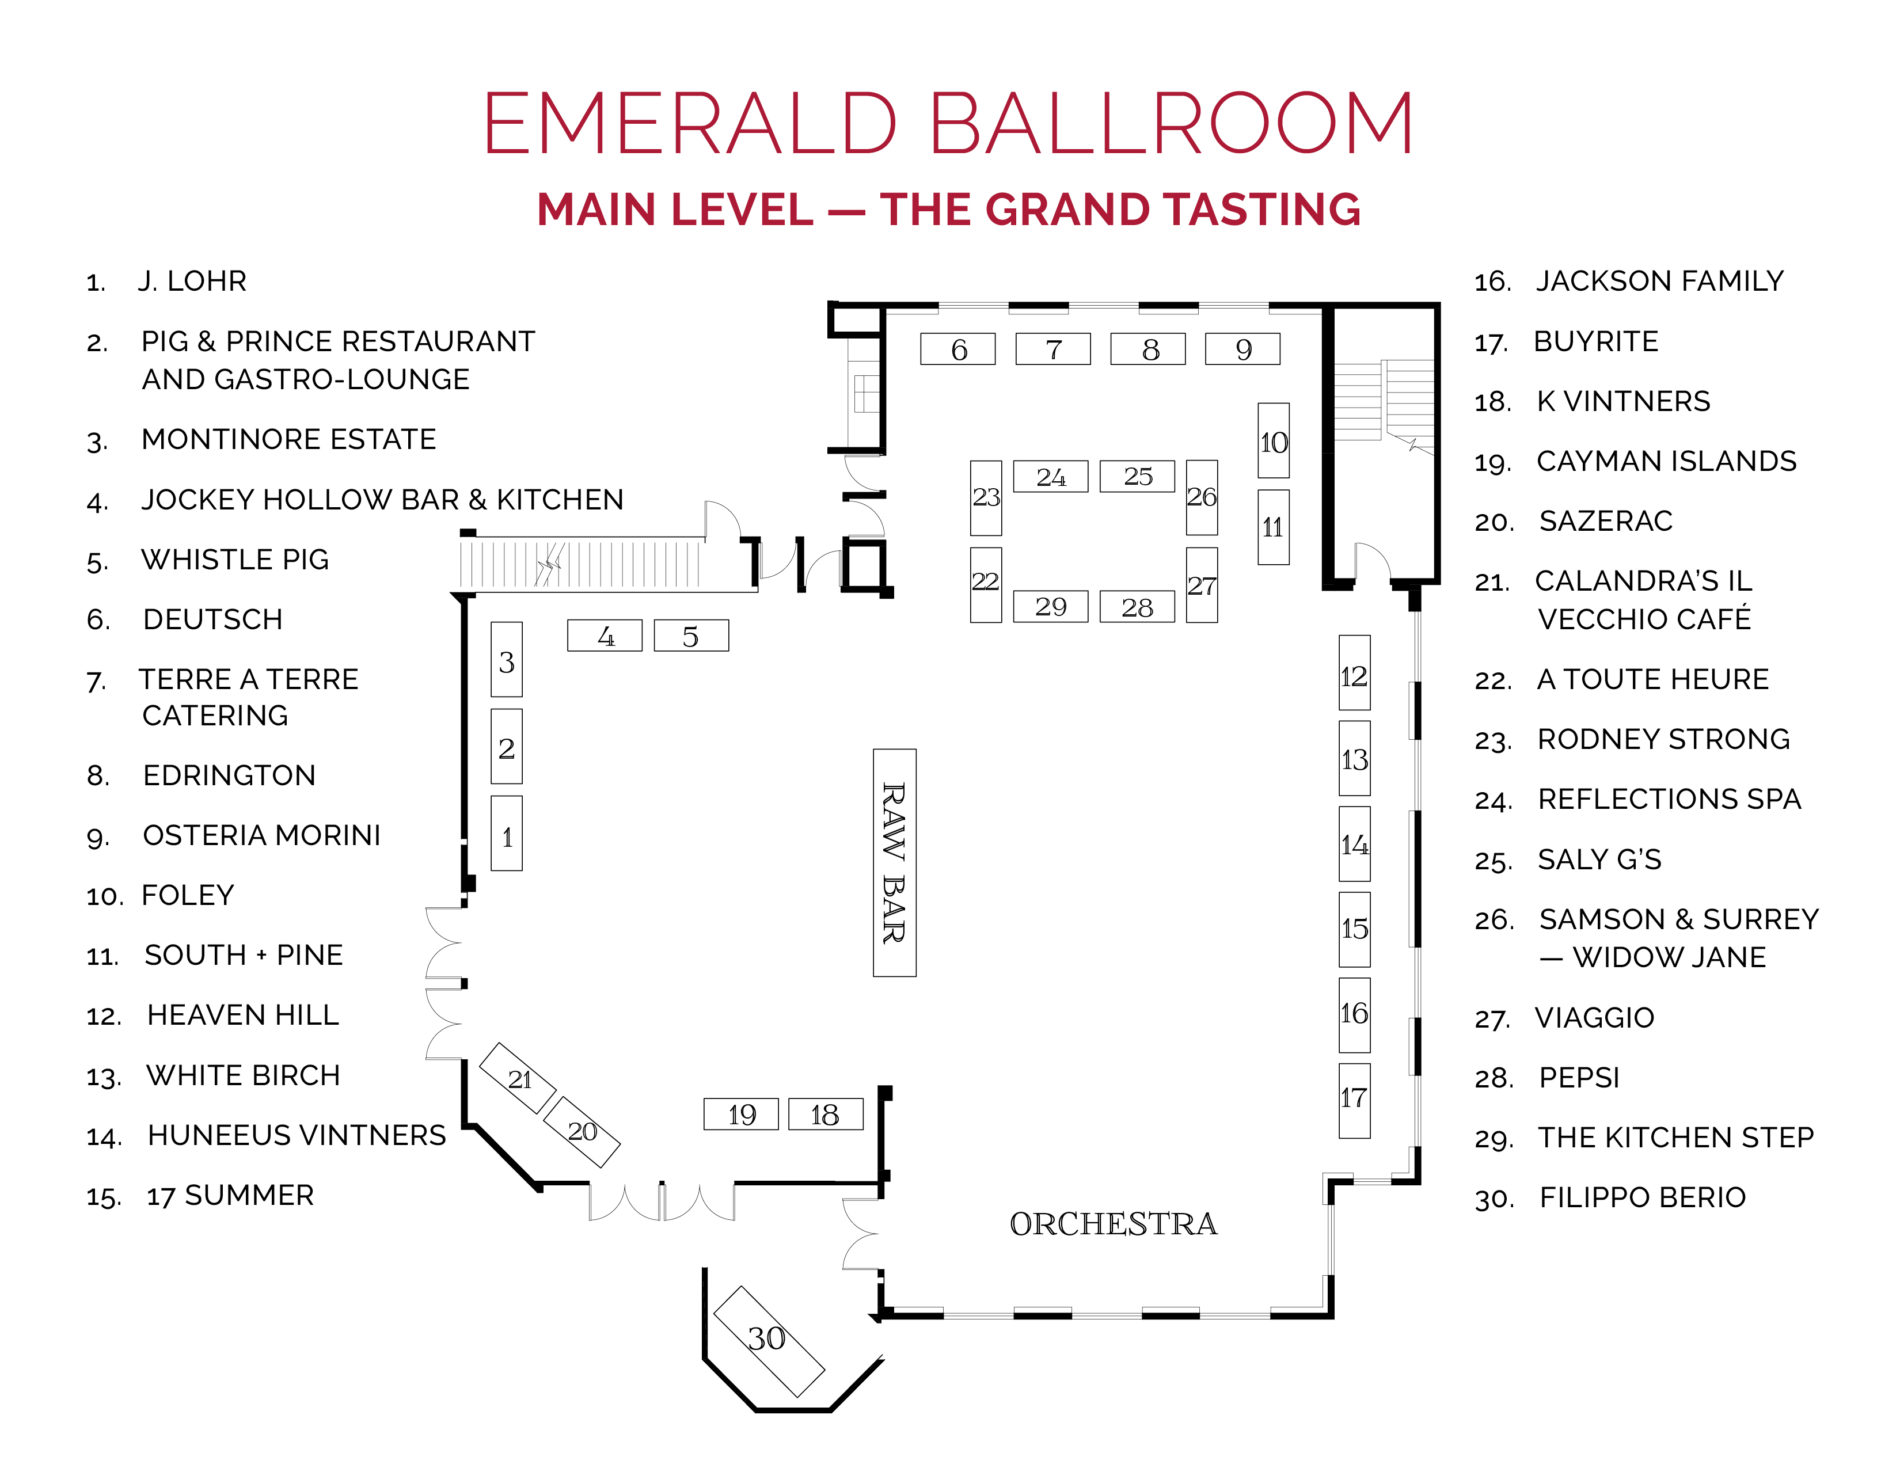 NJWFF Floorplan 2019 Emerald Ballroom